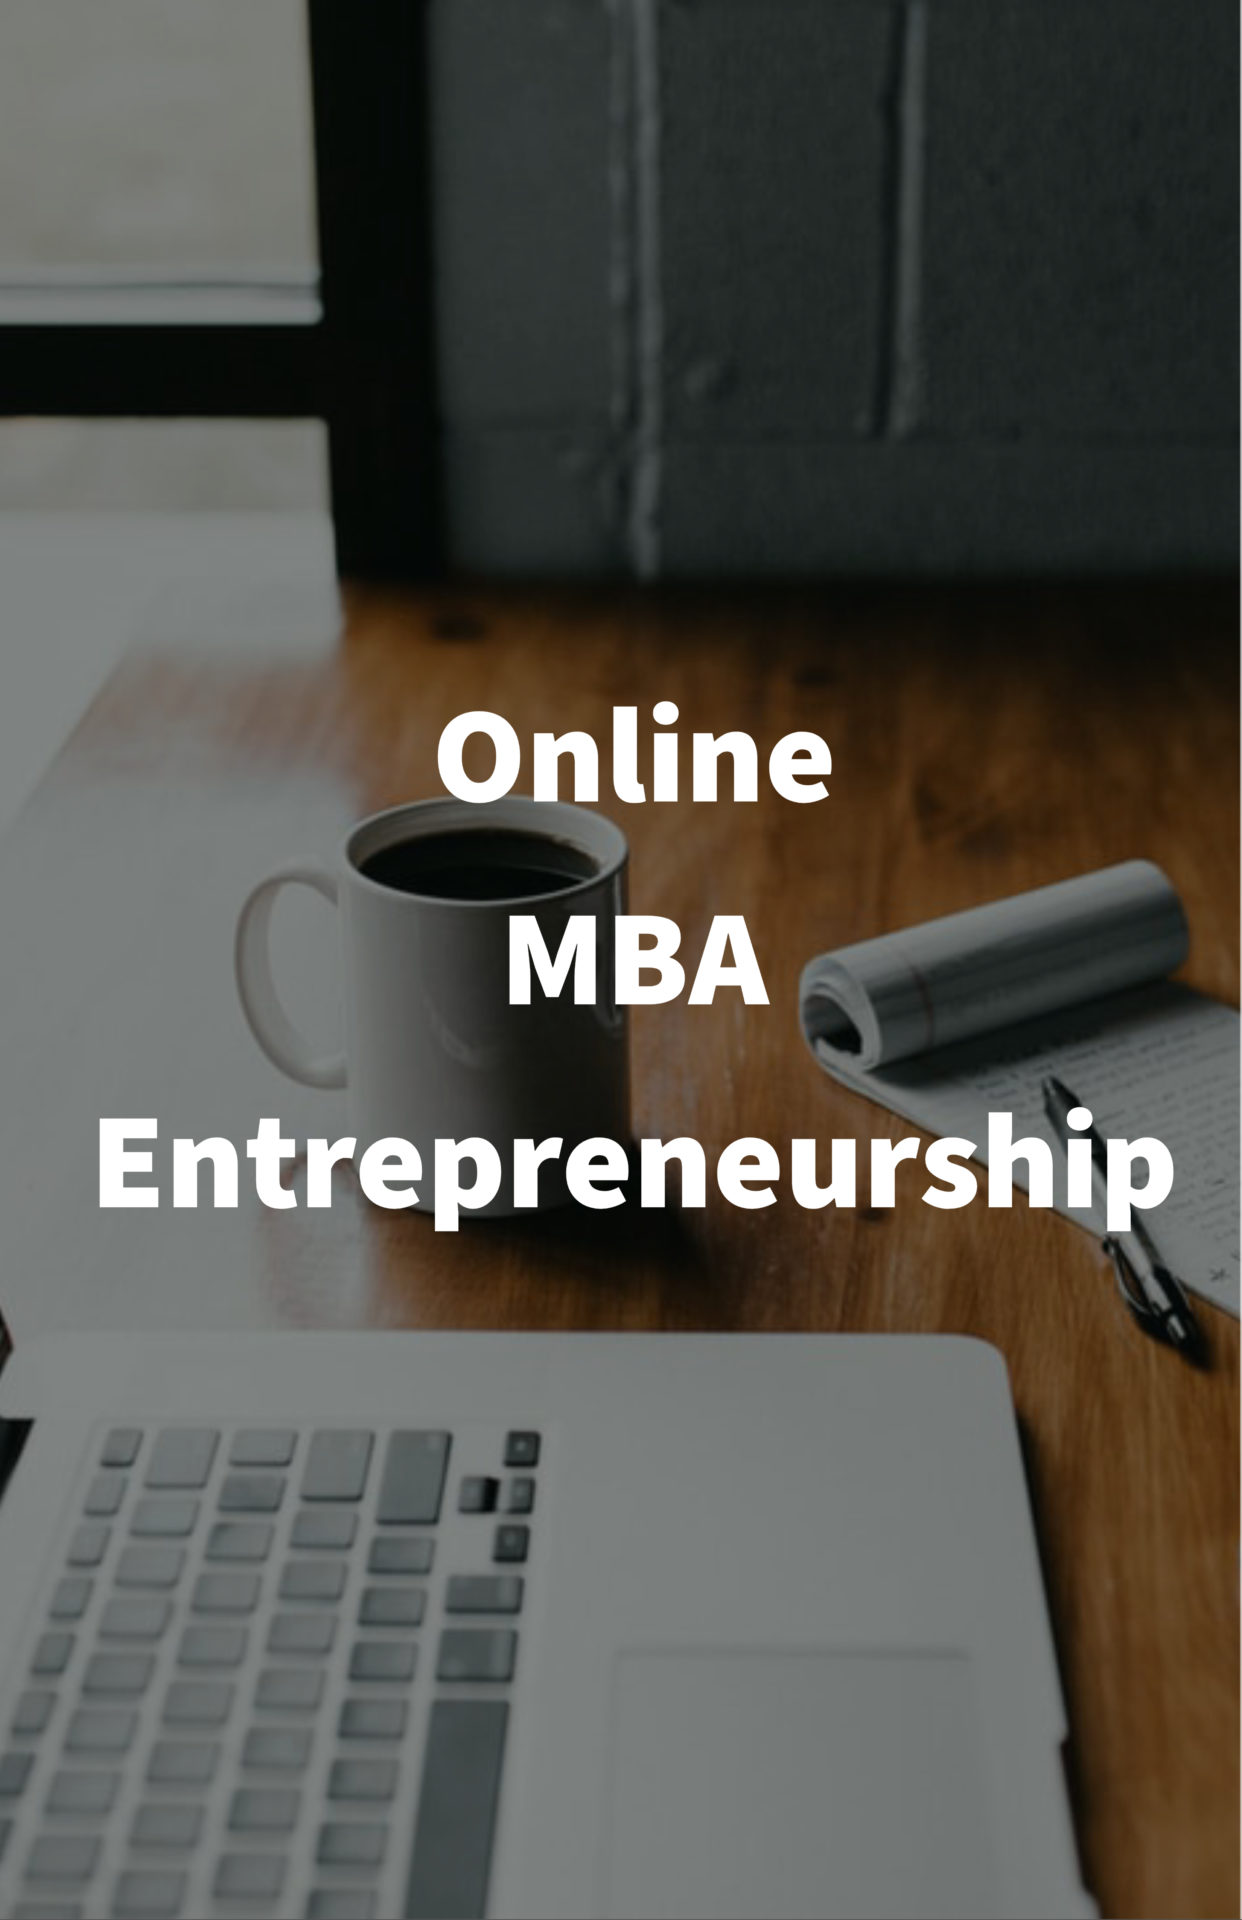 MBA Entrepreneurship